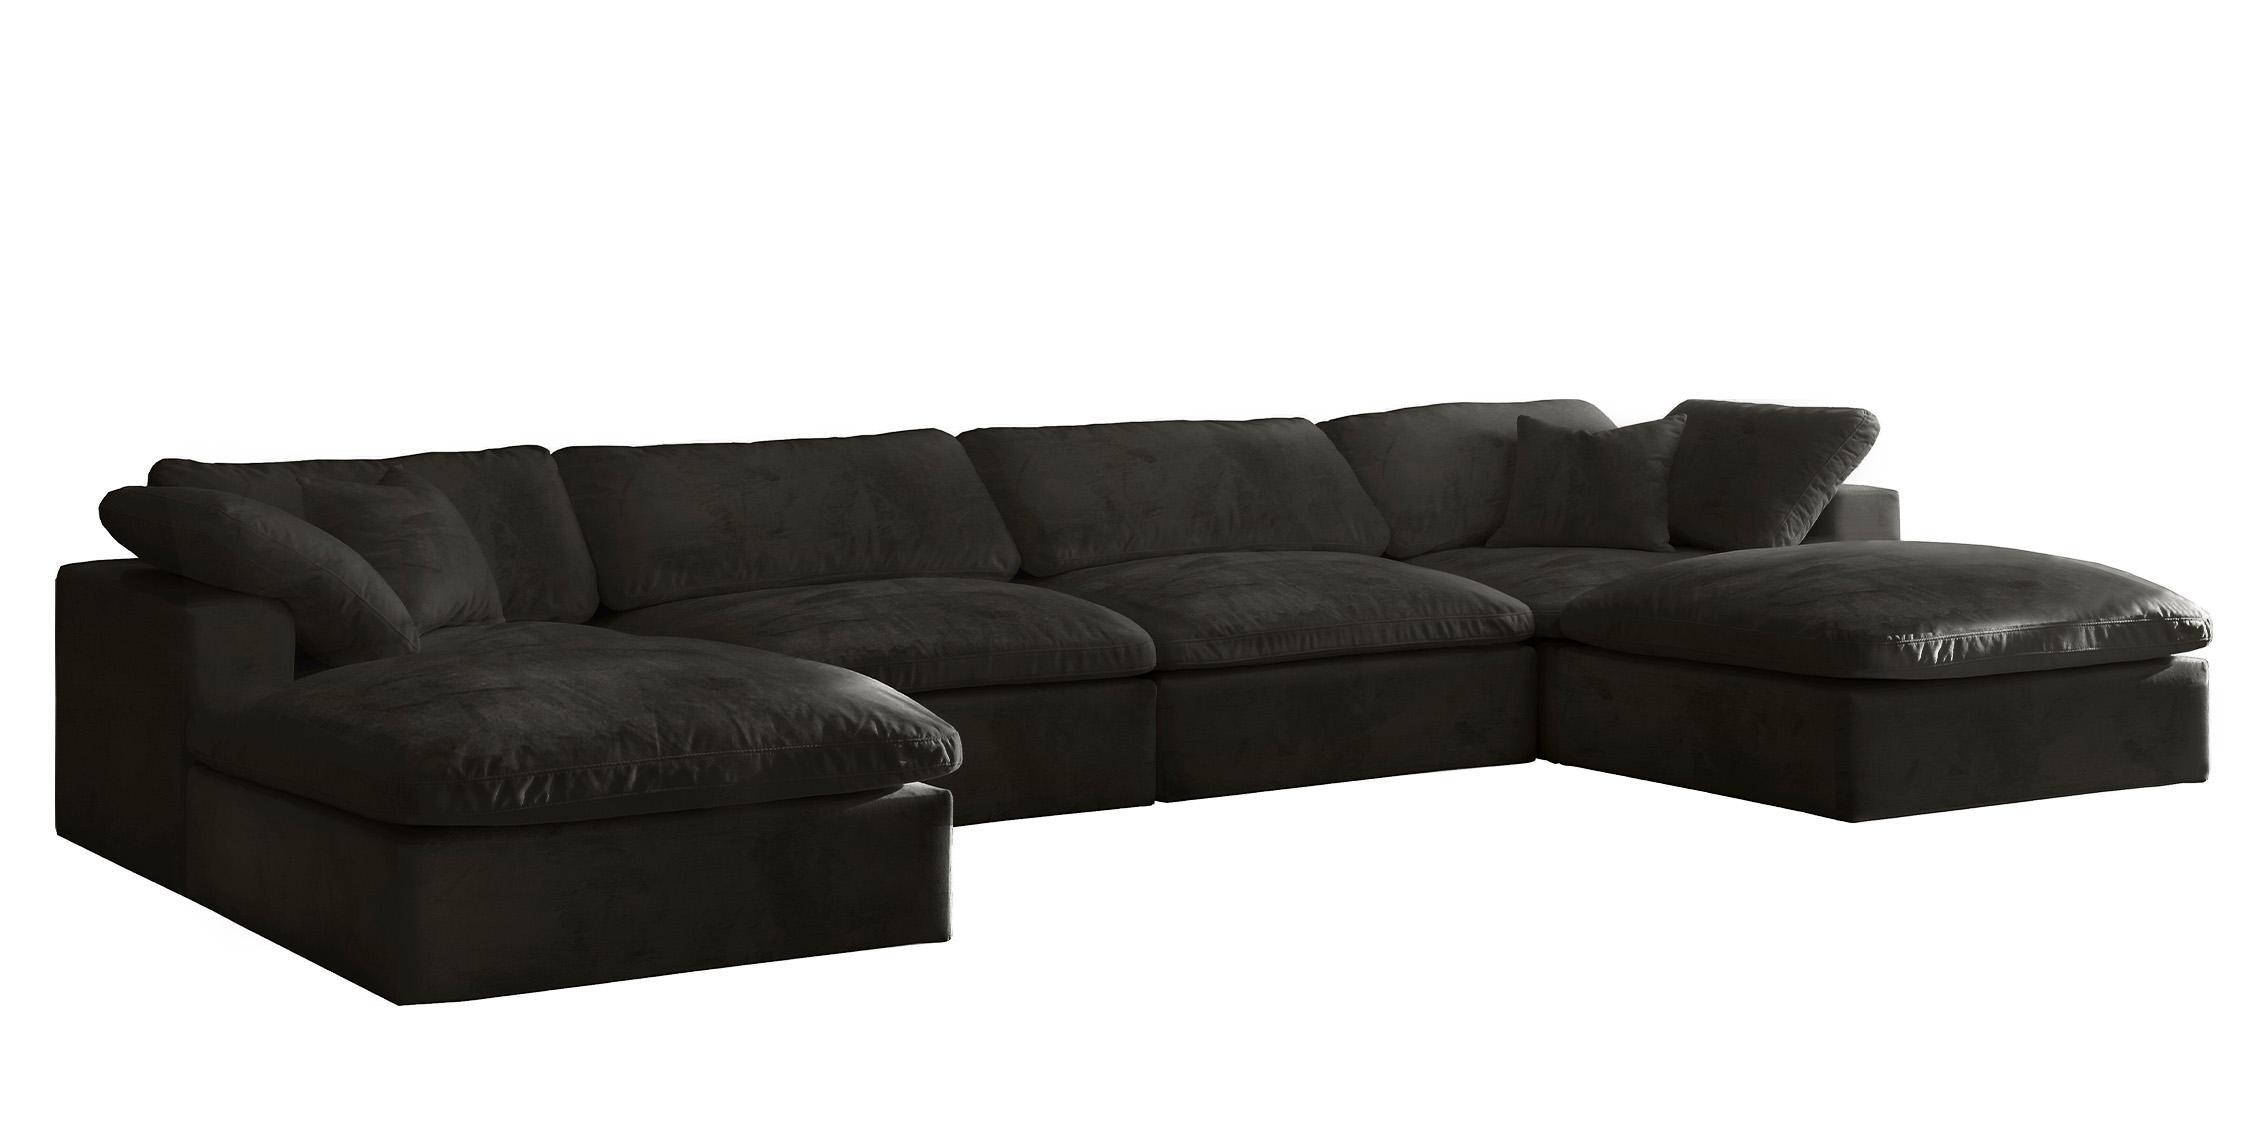 Contemporary, Modern Modular Sectional Sofa 634Black-Sec6B 634Black-Sec6B in Black Fabric